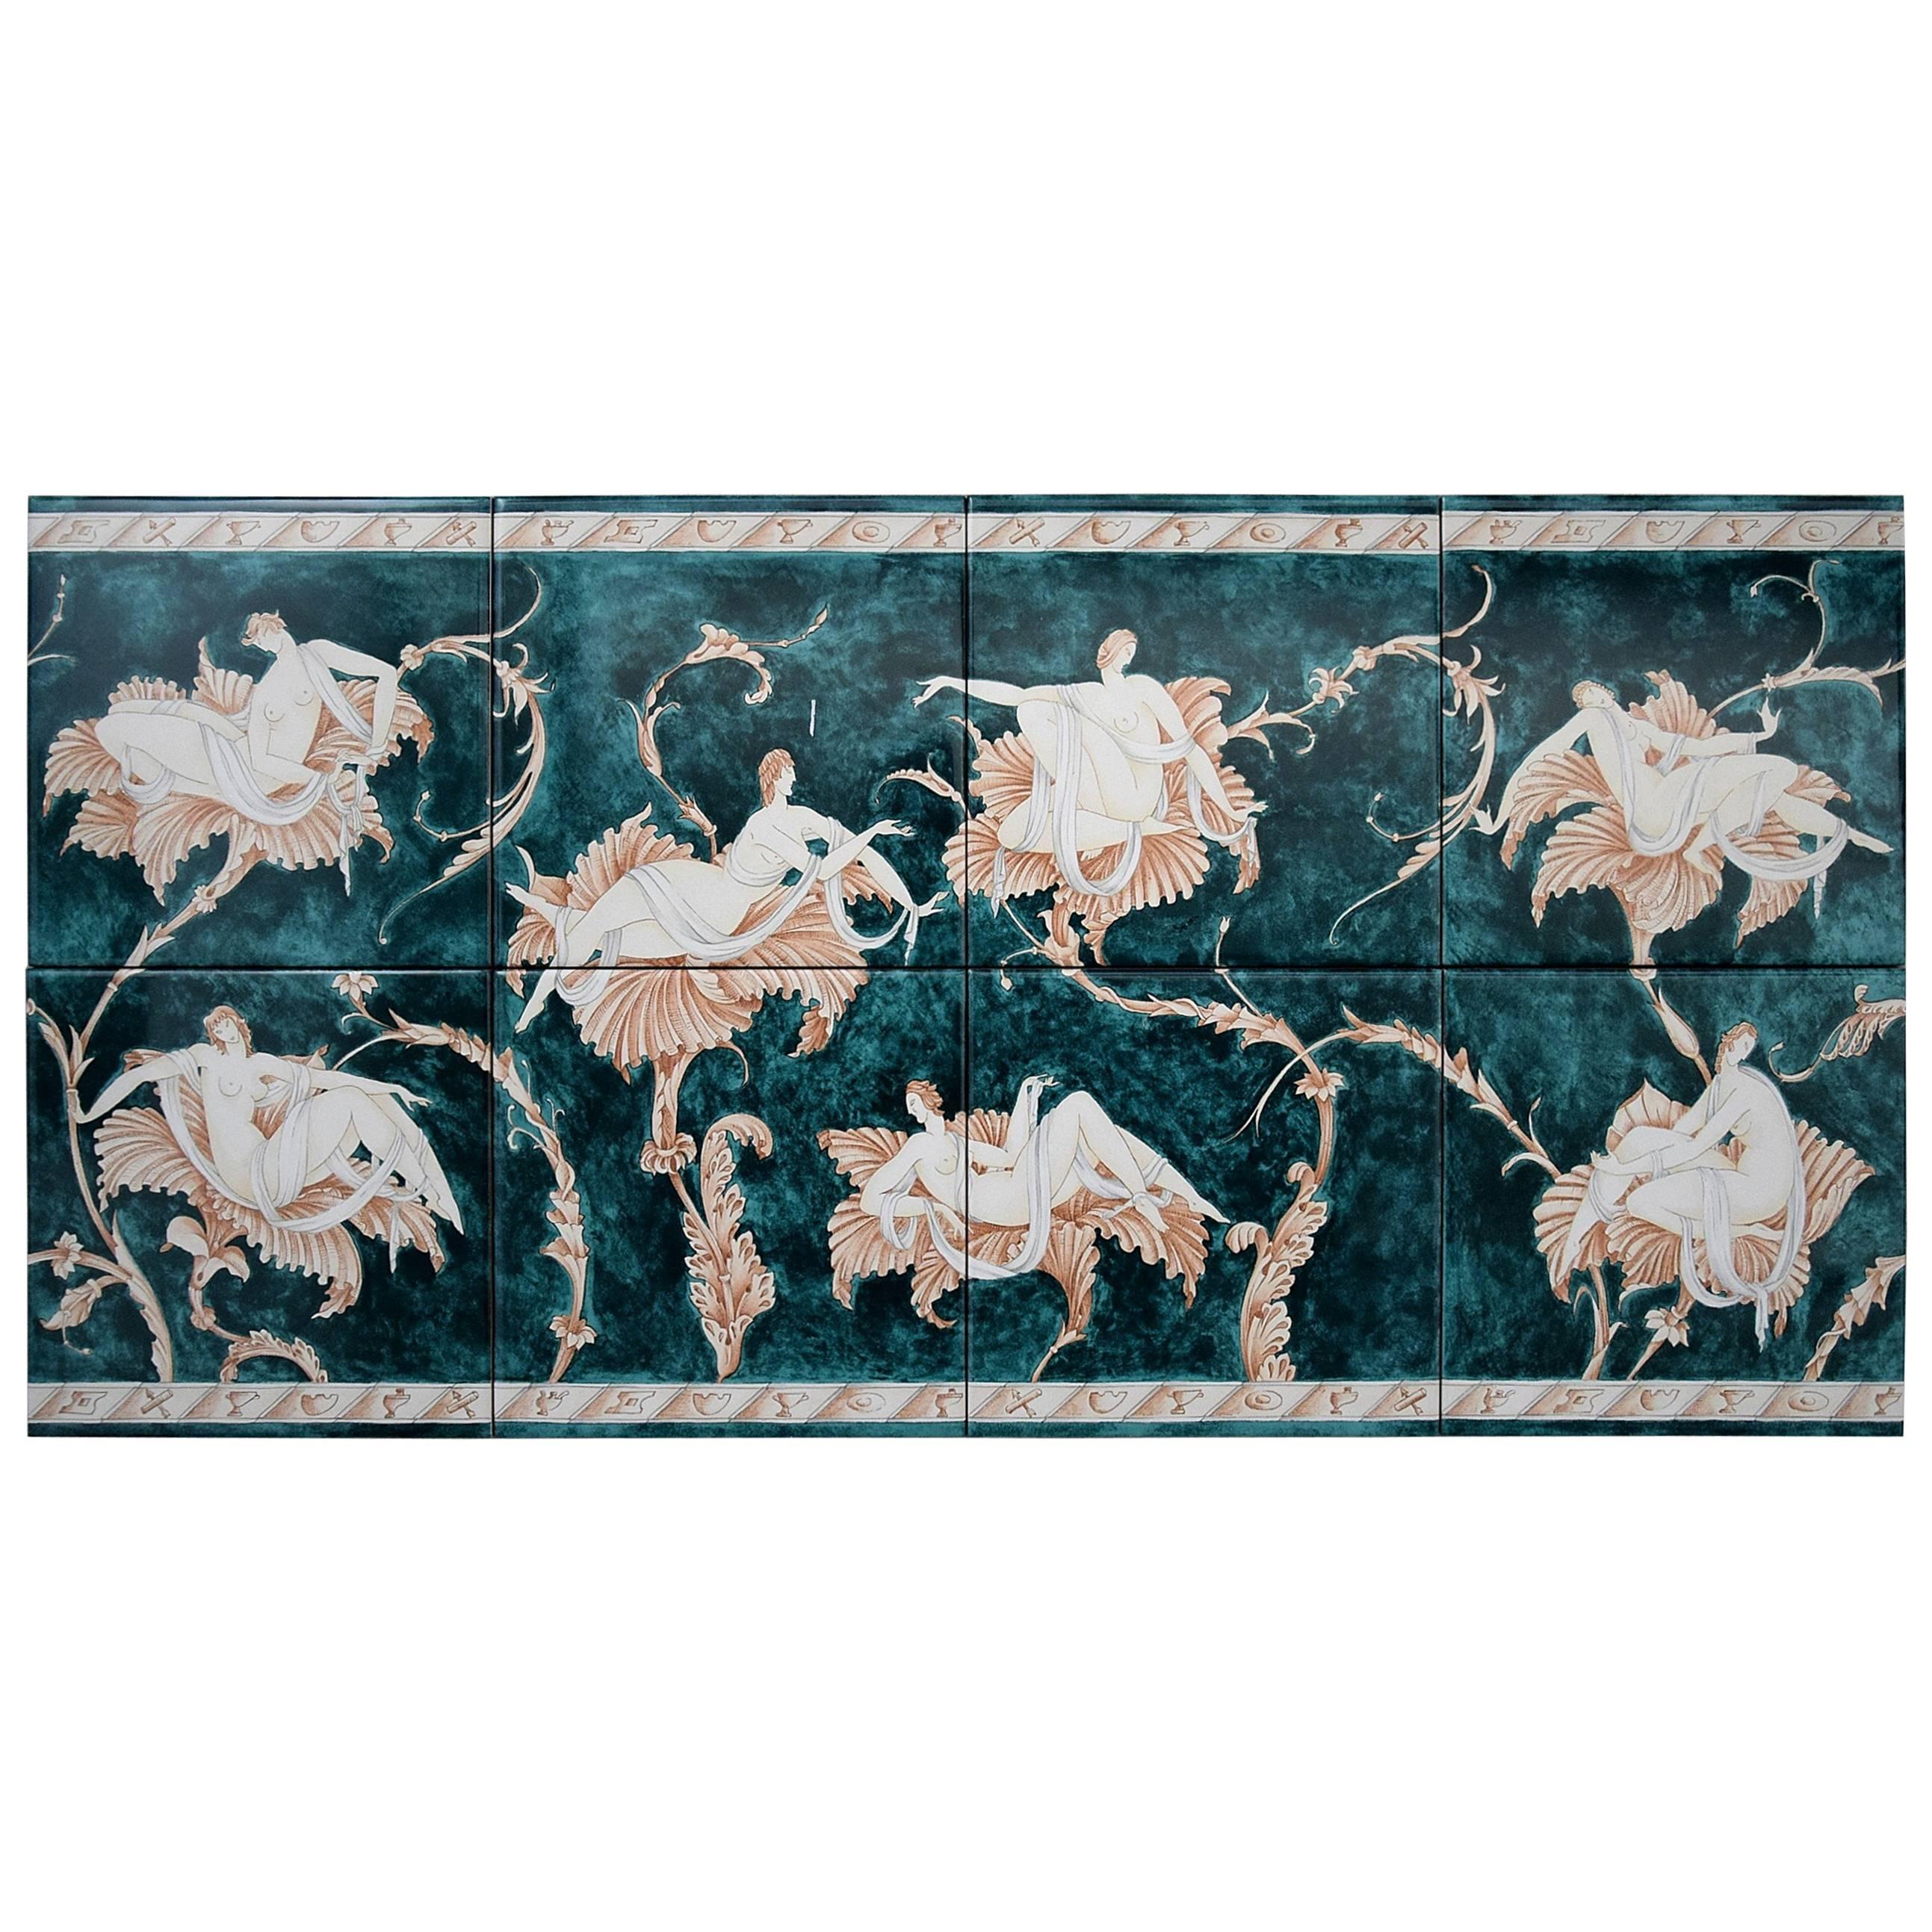 Ceramic Tiles with "Le Donne Sui Fiori" Designed by Gio Ponti